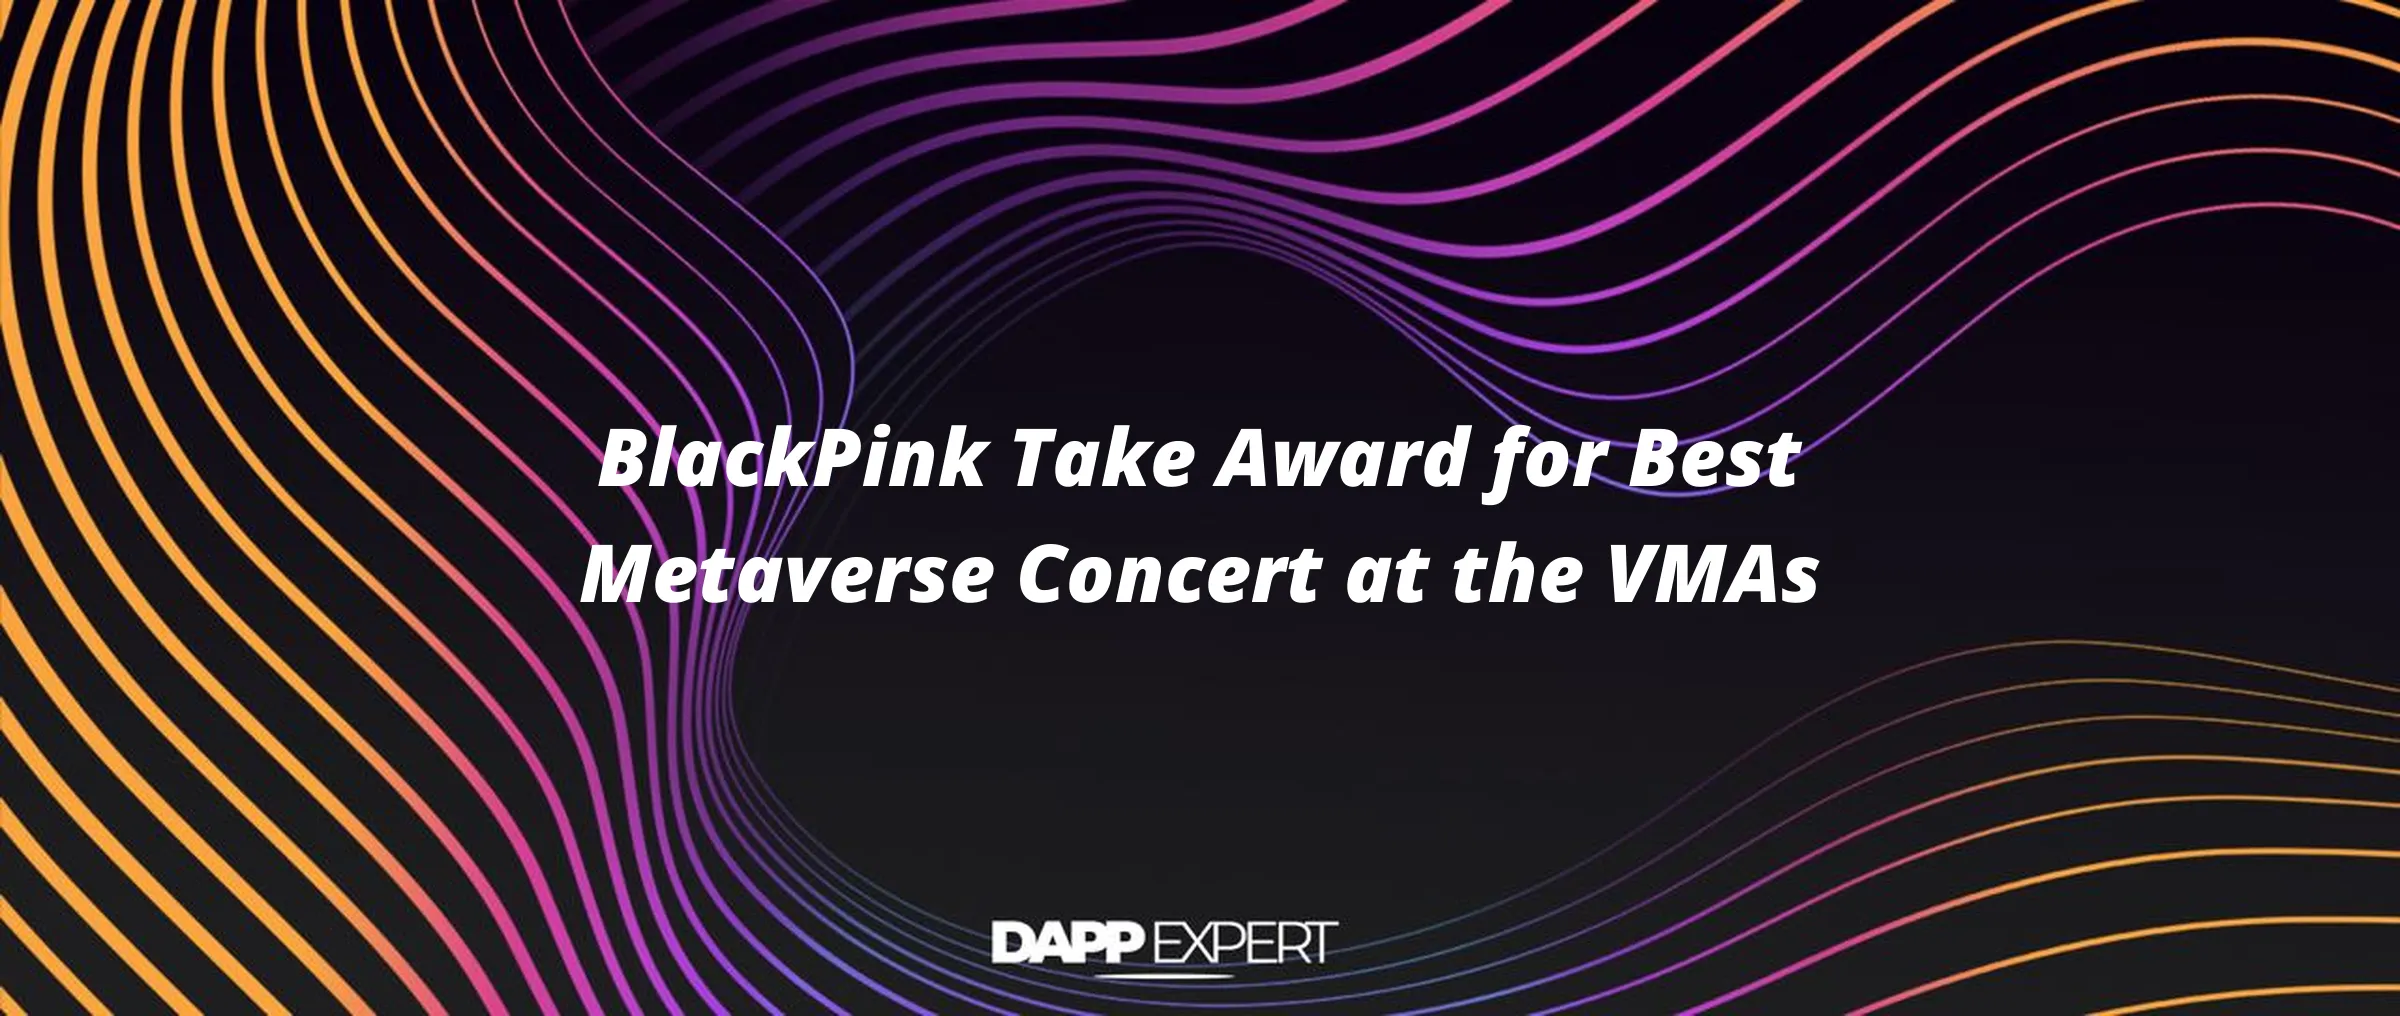 BlackPink Take Award for Best Metaverse Concert at the VMAs